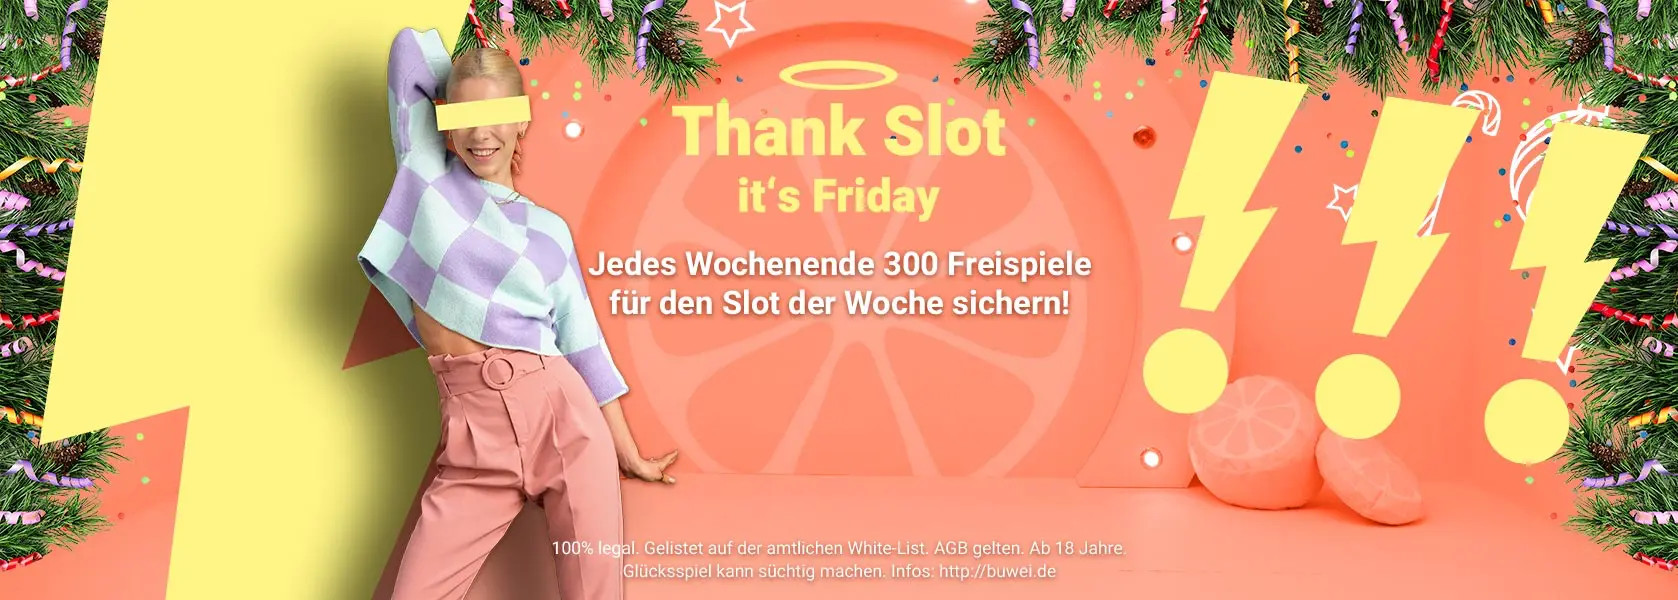 Thank Slot it's Friday! Bonus